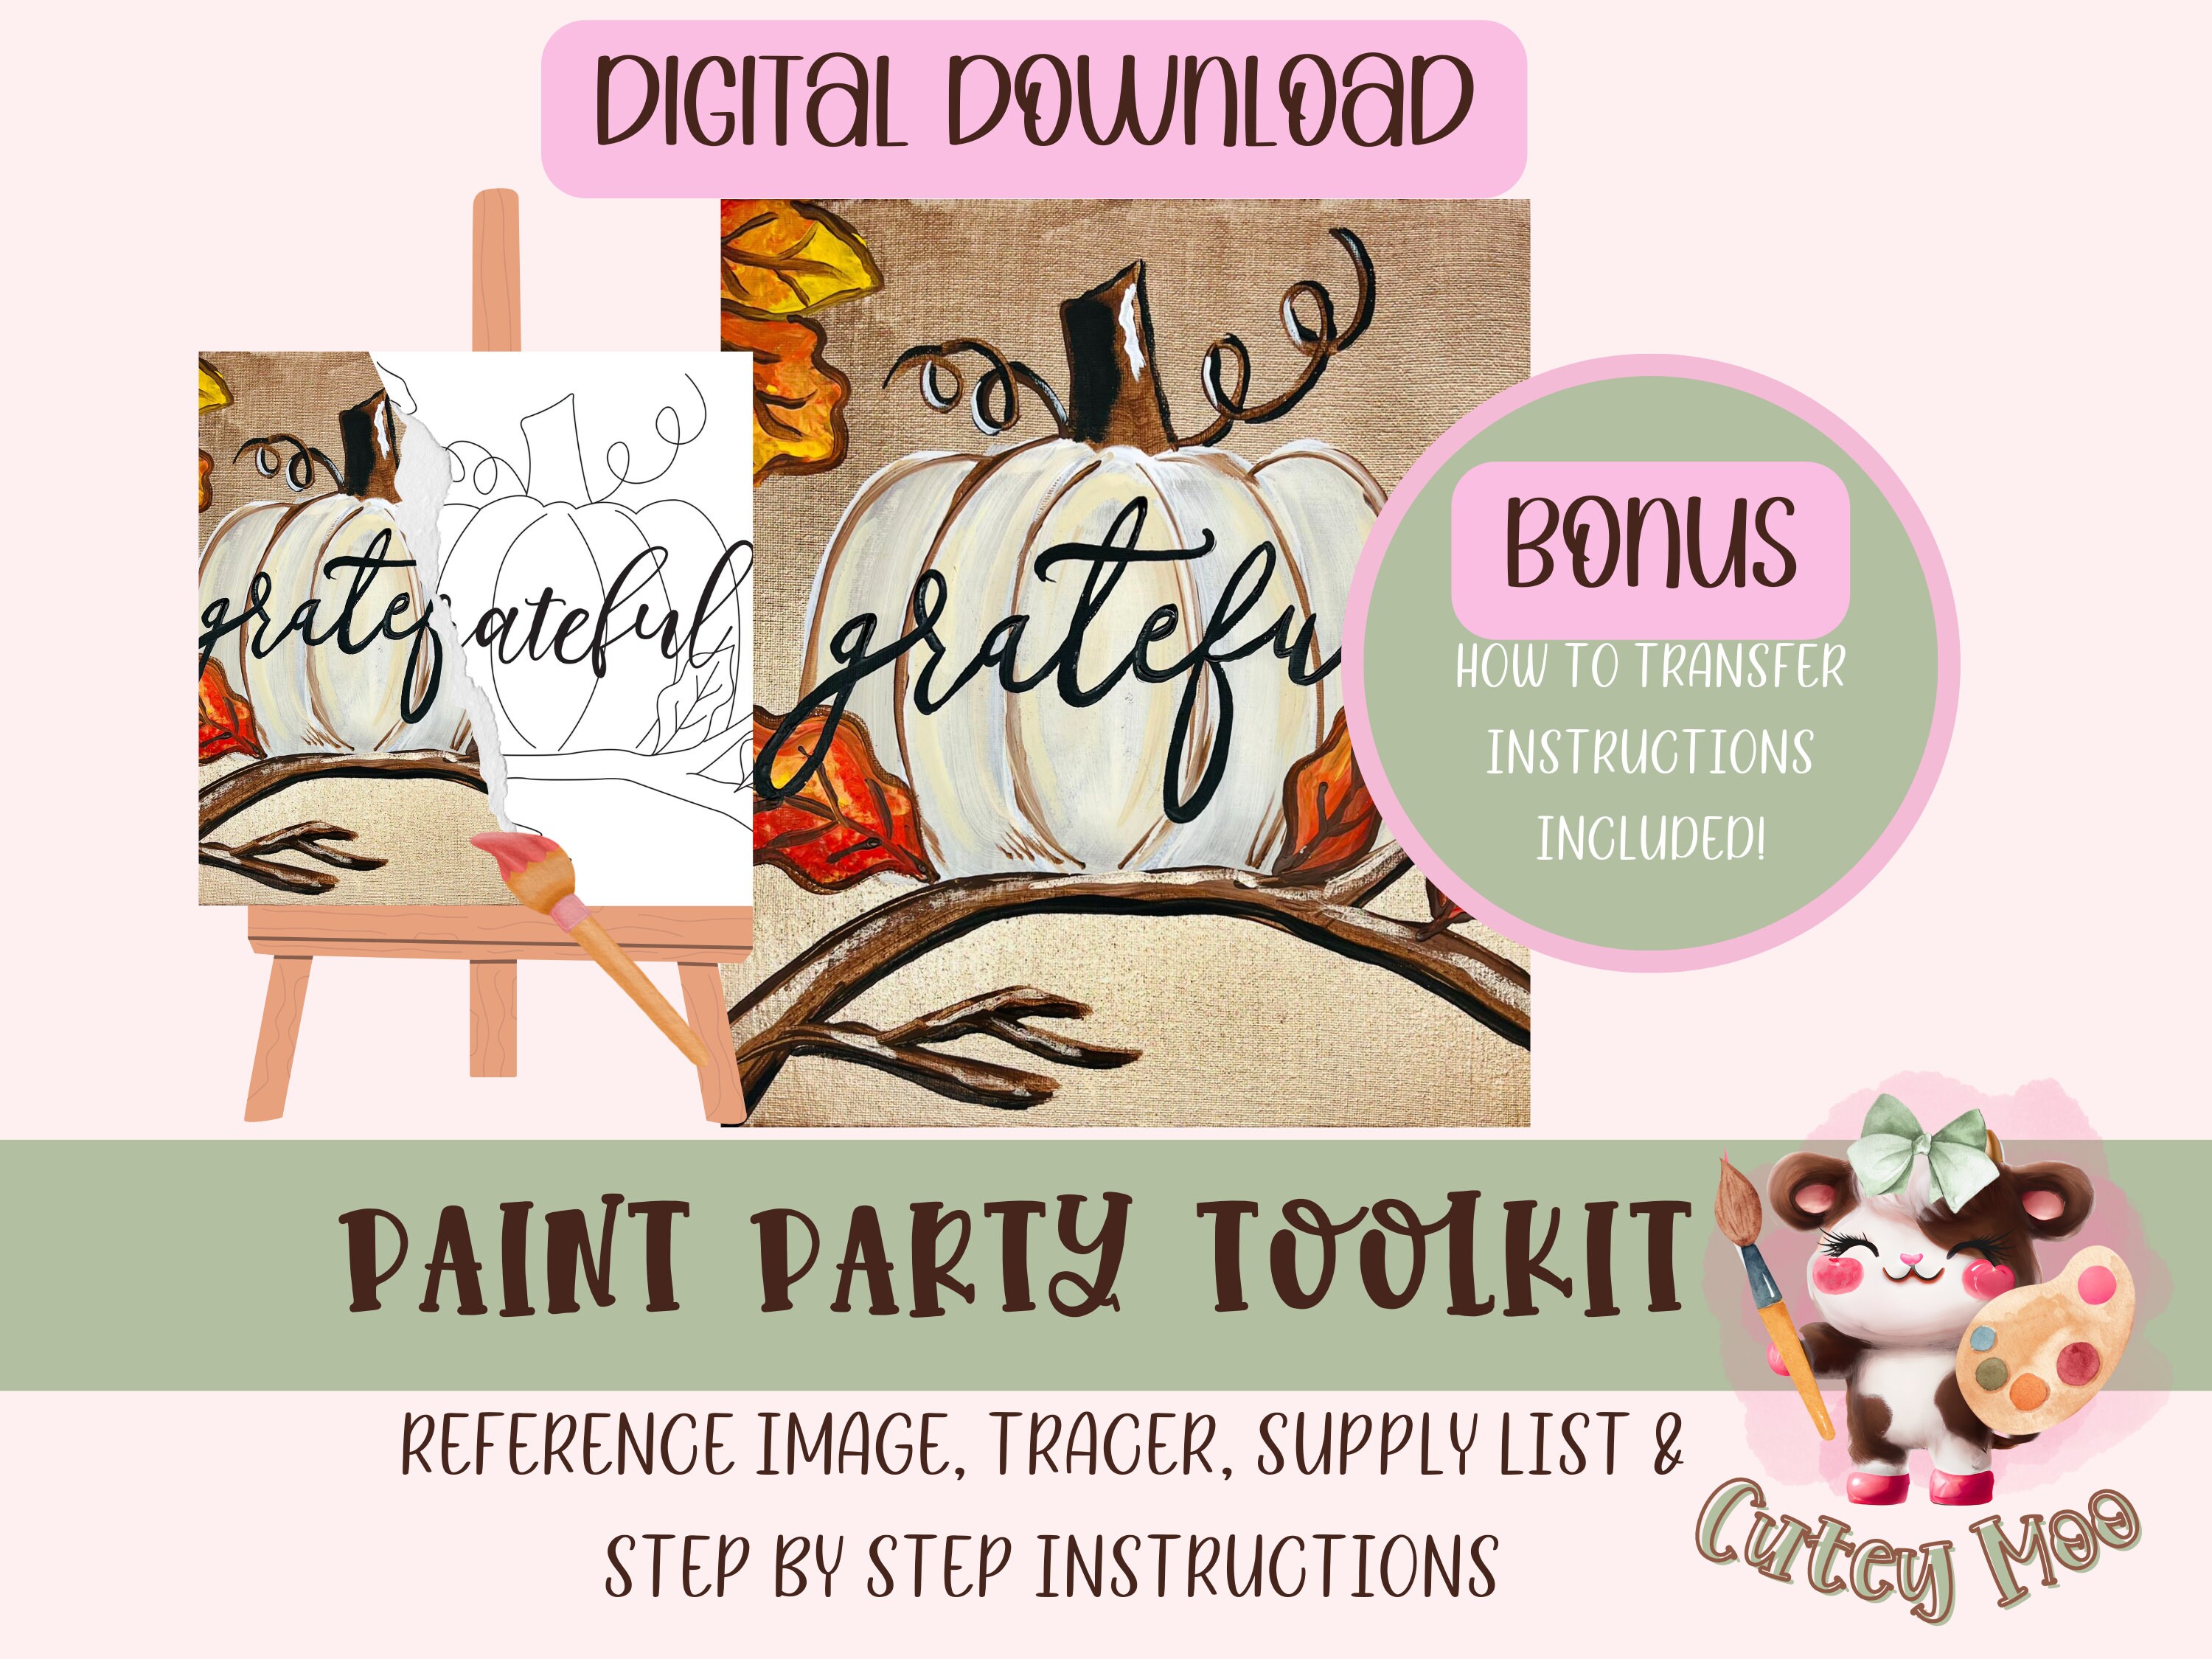 Kids/home Paint Kit/pick3 Designs/hand-drawn Canvas/kids Birthday Art  Party/diy Paint/acrylic Paint Kit 